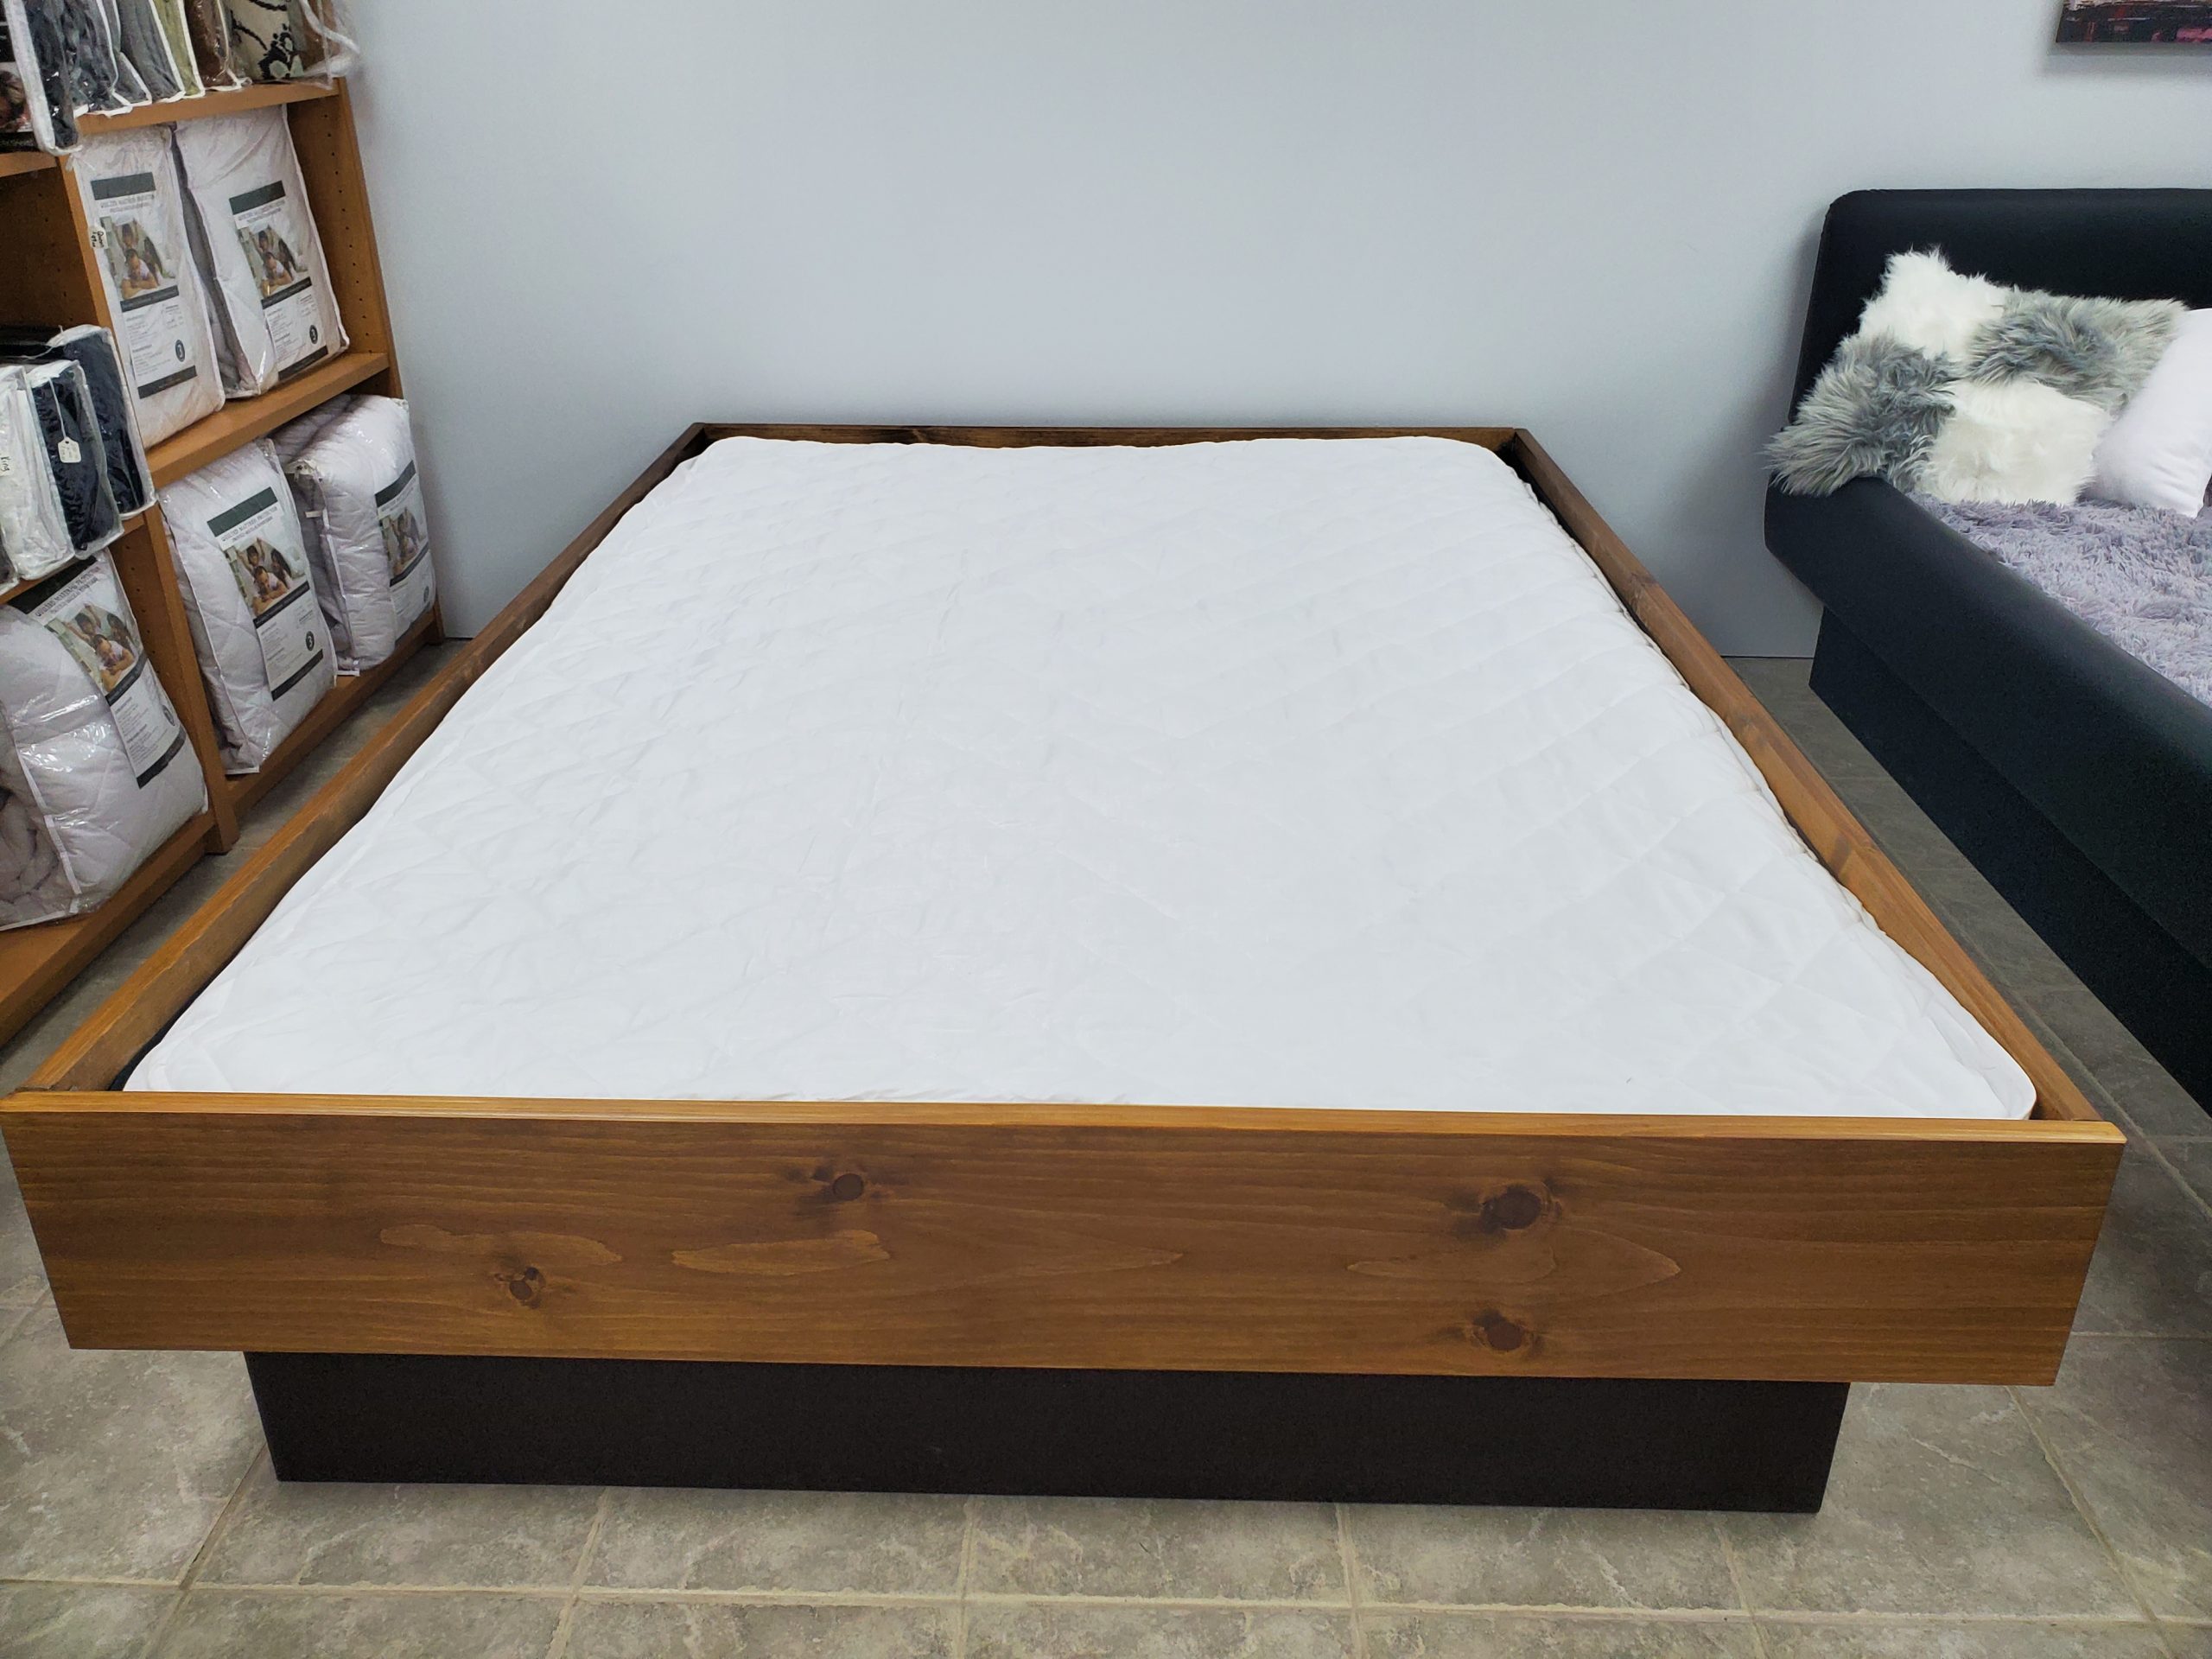 single air mattress pad